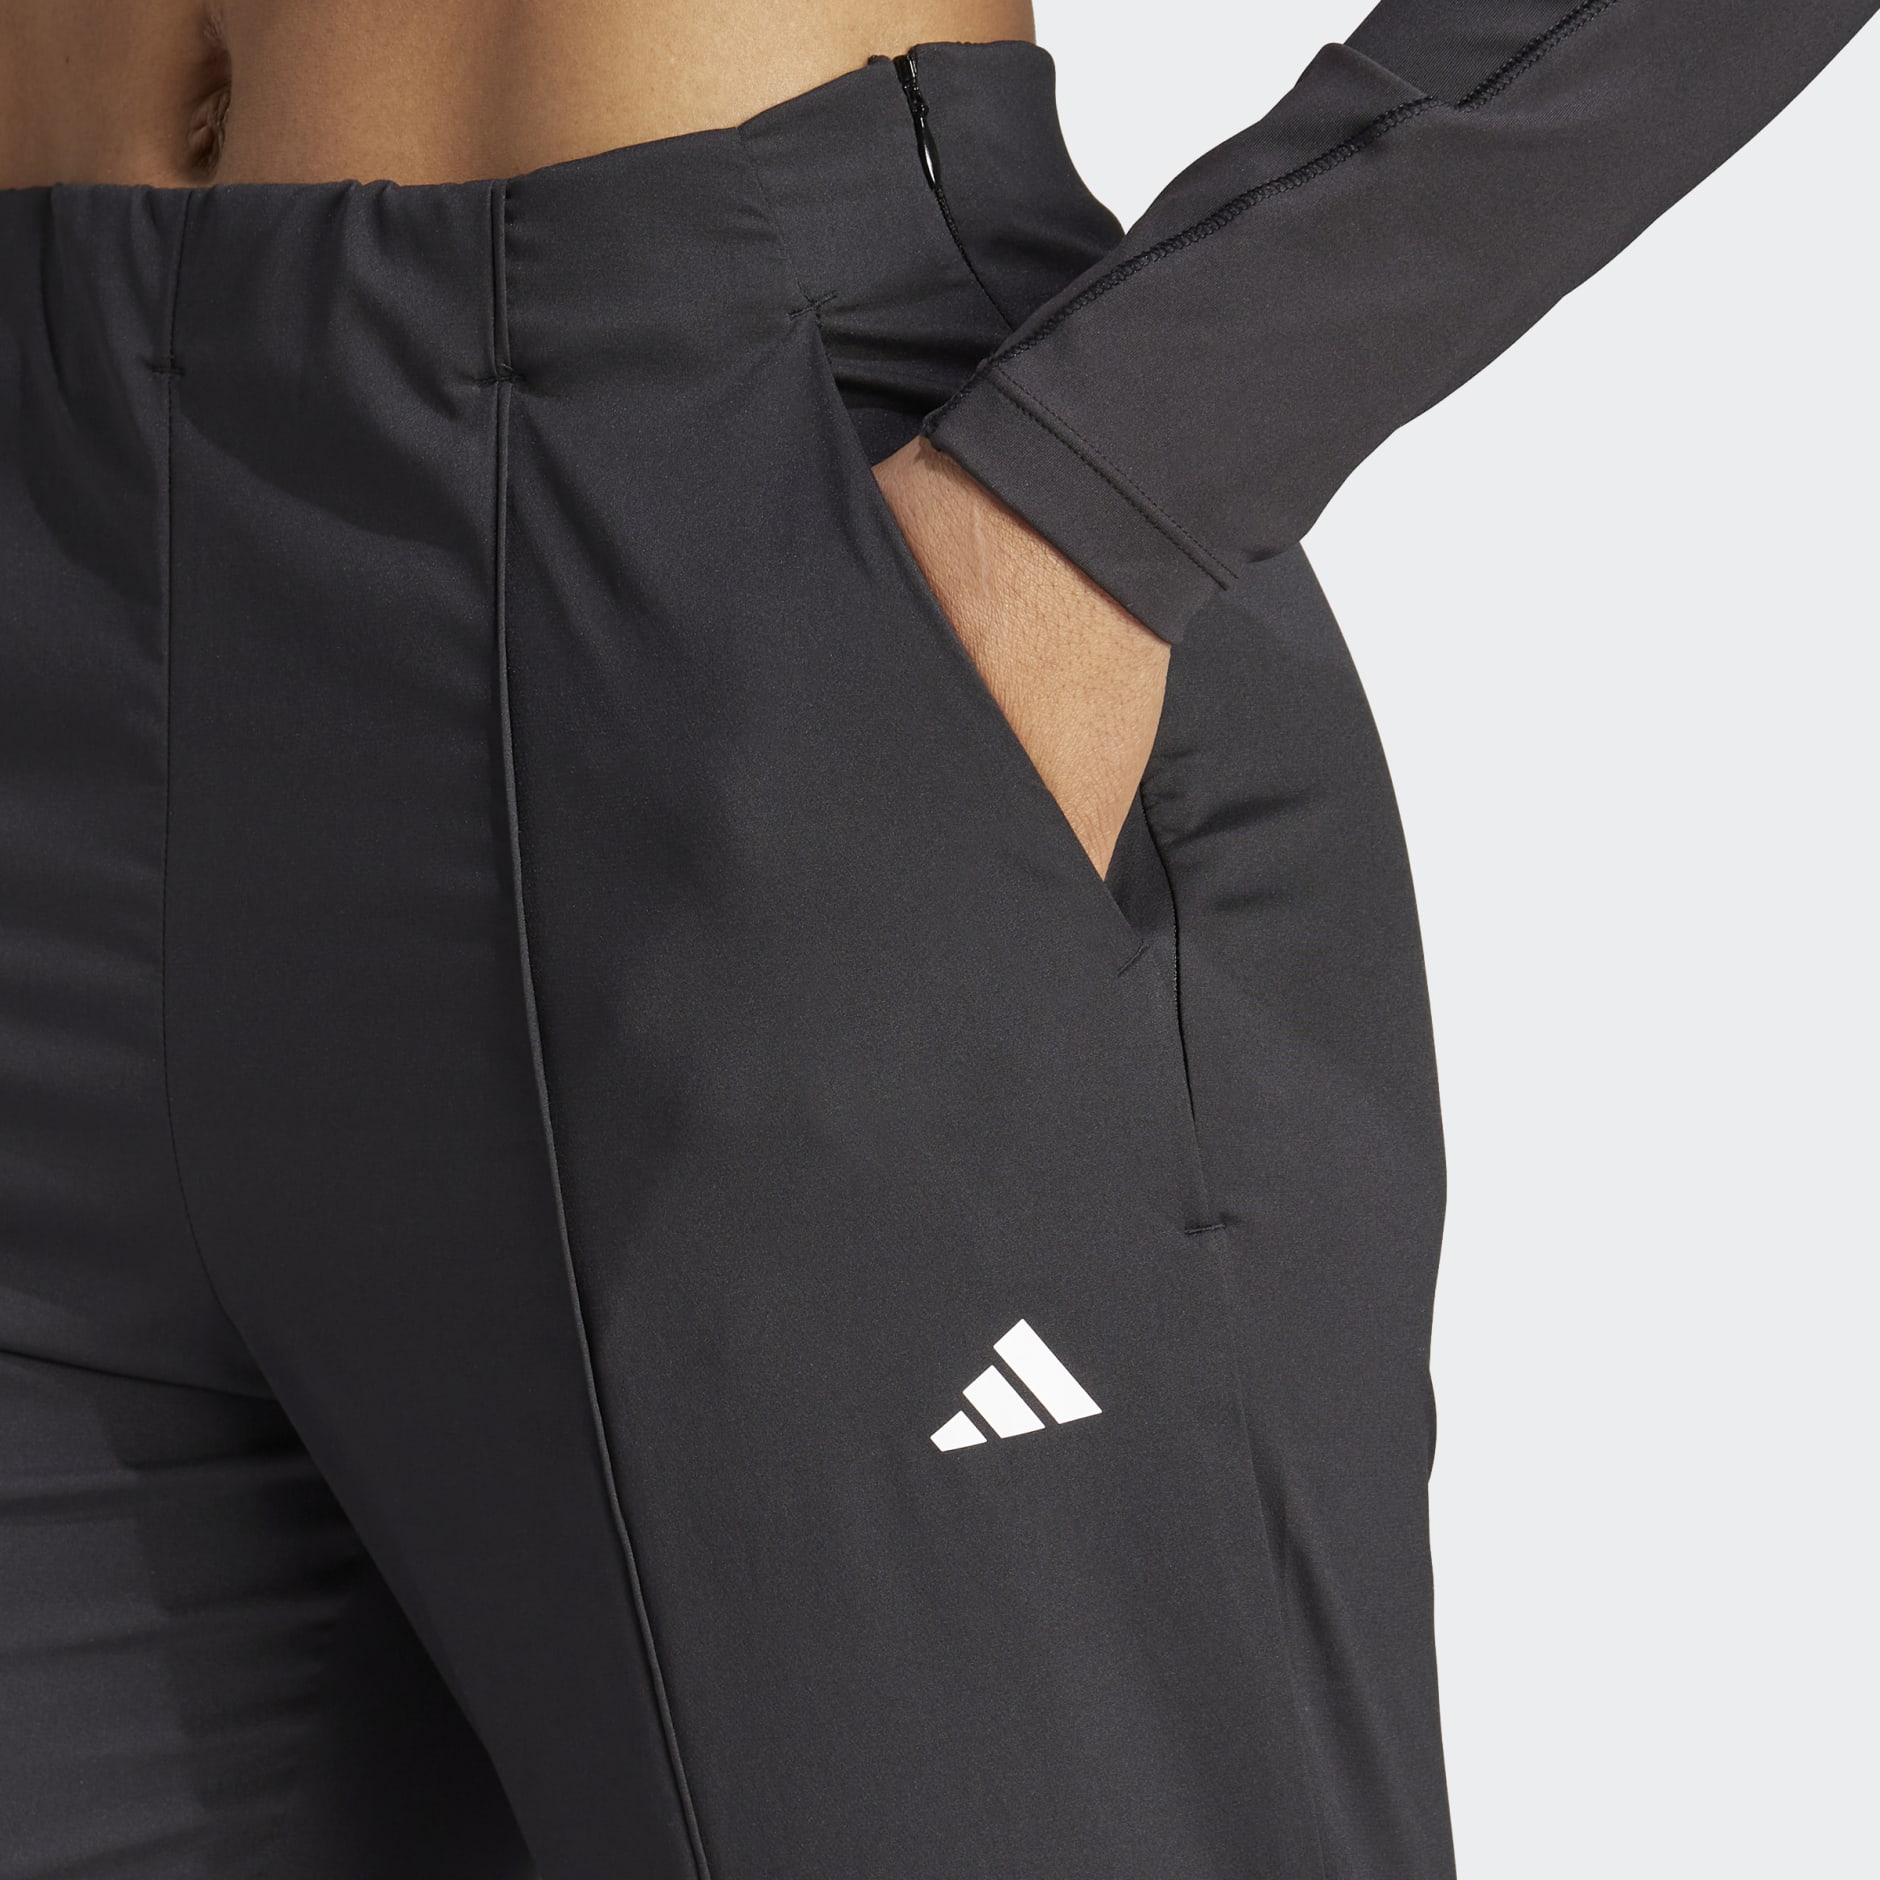 Train adidas Branding Black Pants LK - Essentials Minimal AEROREADY adidas Woven |